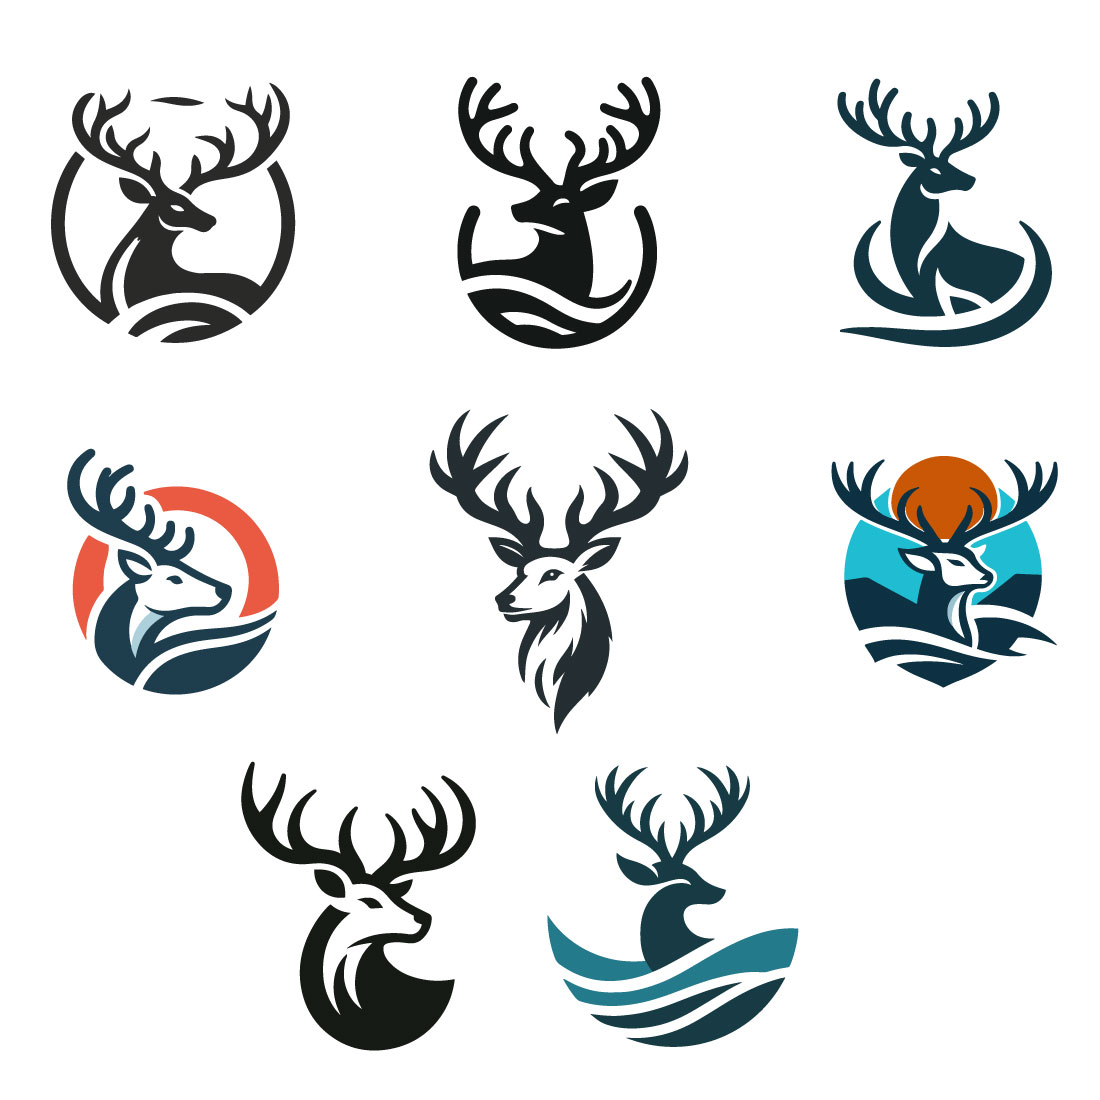 8 Deer Logos Vector Illustration cover image.